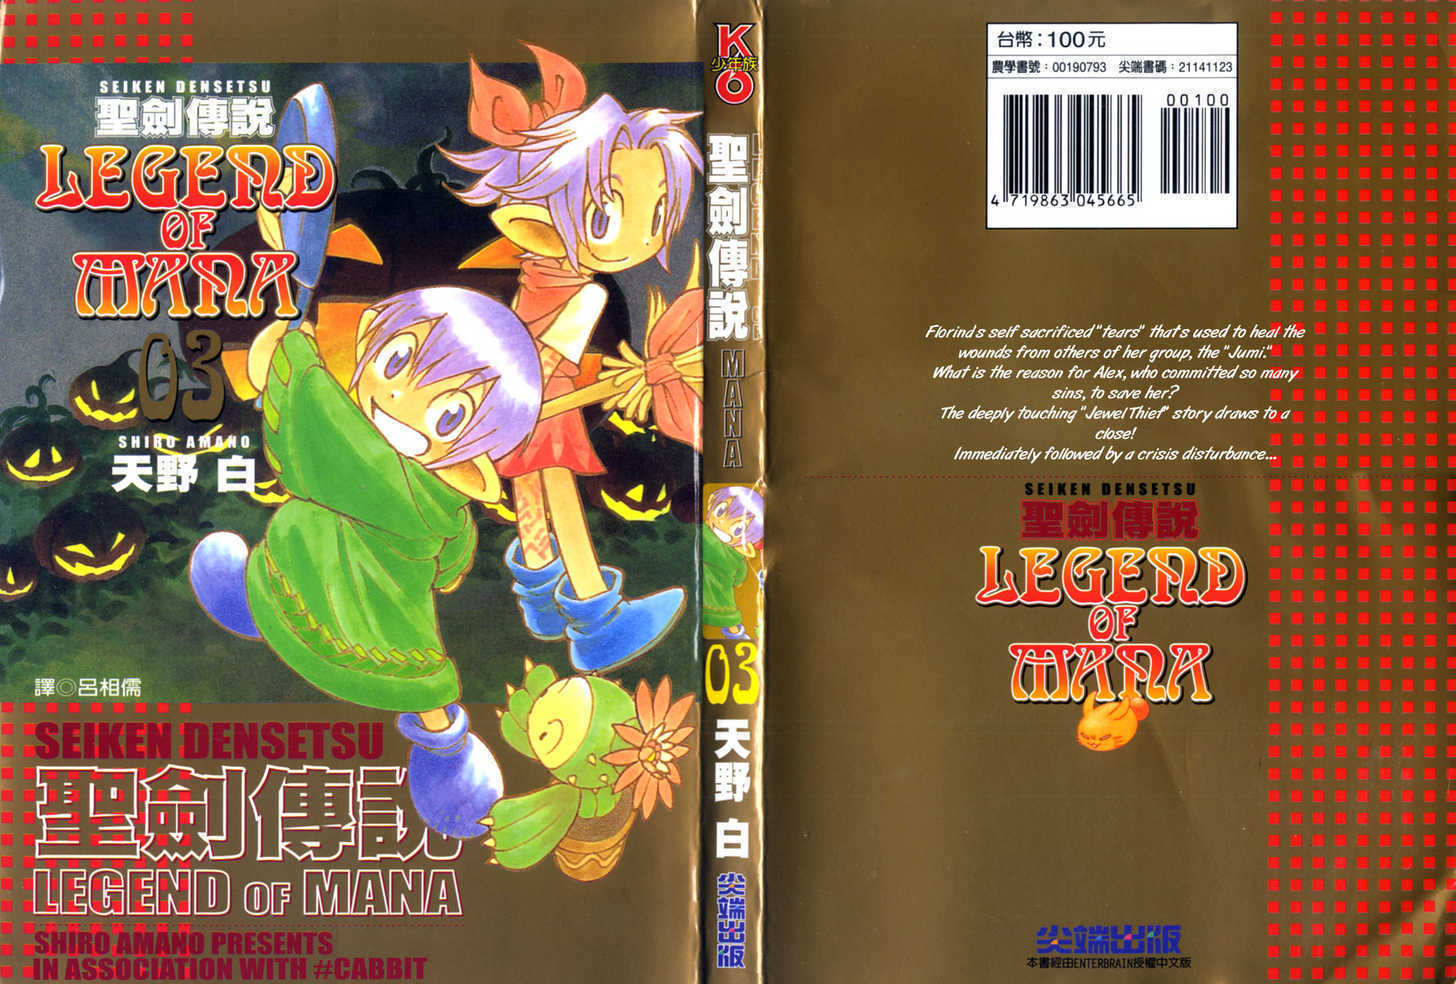 Seiken Densetsu: Legend of Mana 13